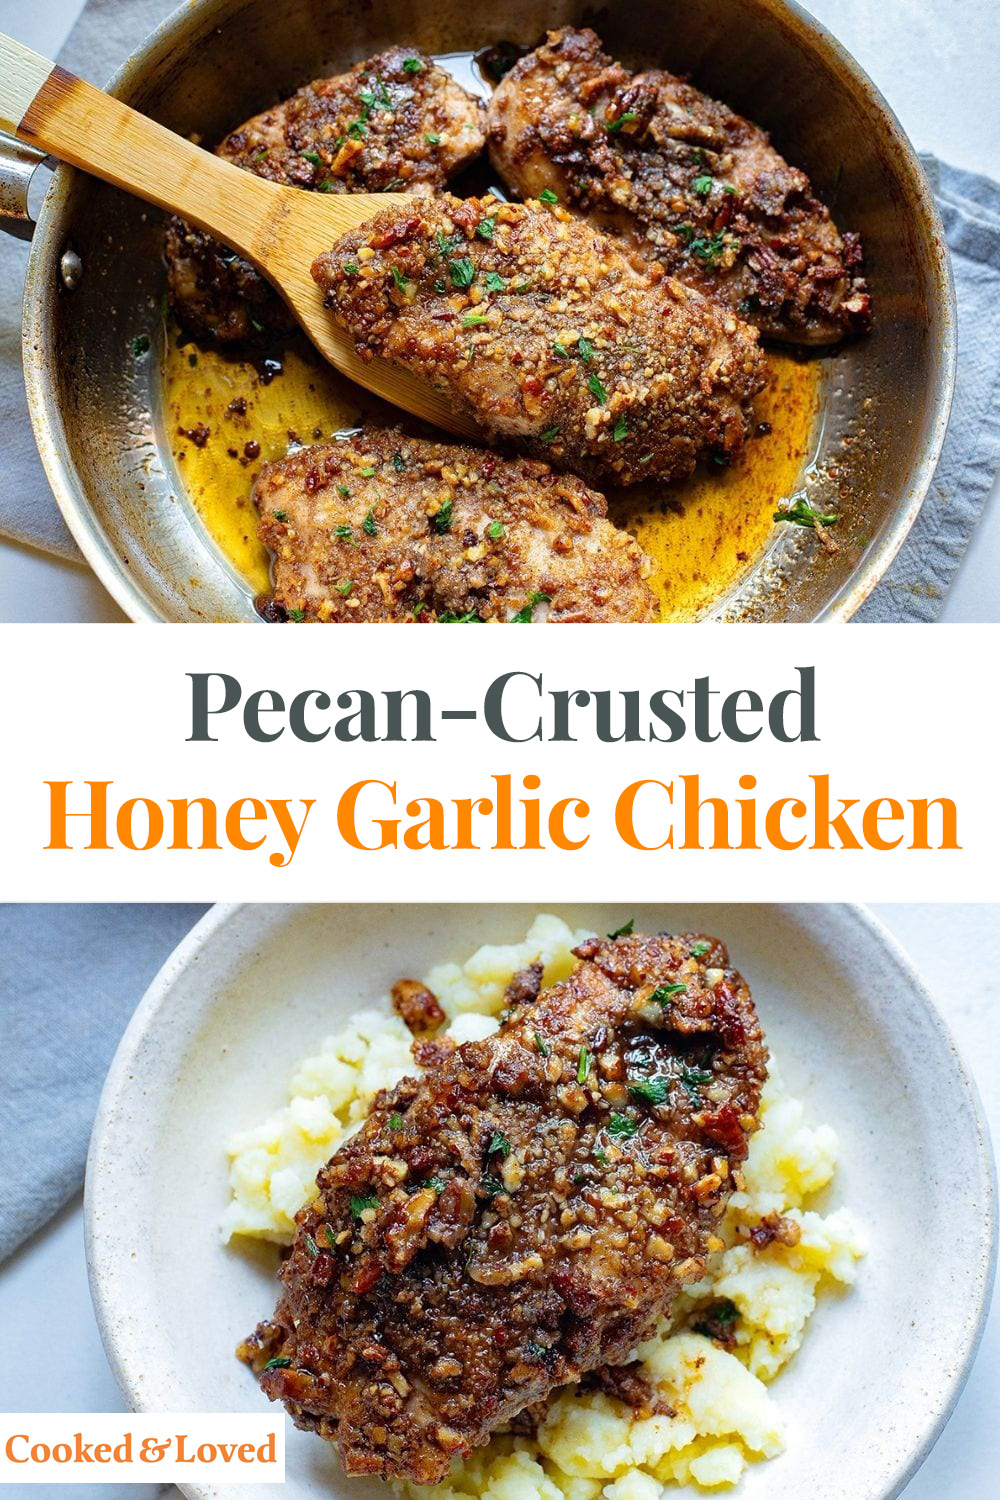 Pecan-Crusted Chicken With Honey & Garlic